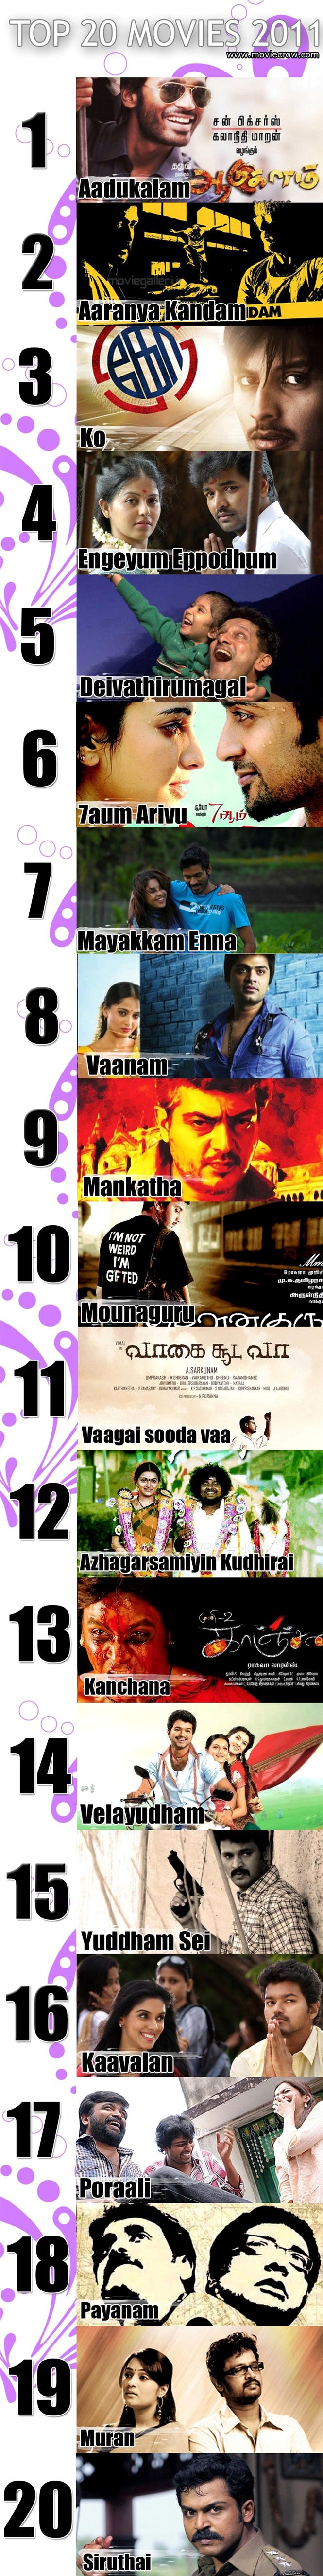 Top 20 Tamil Movies of 2011